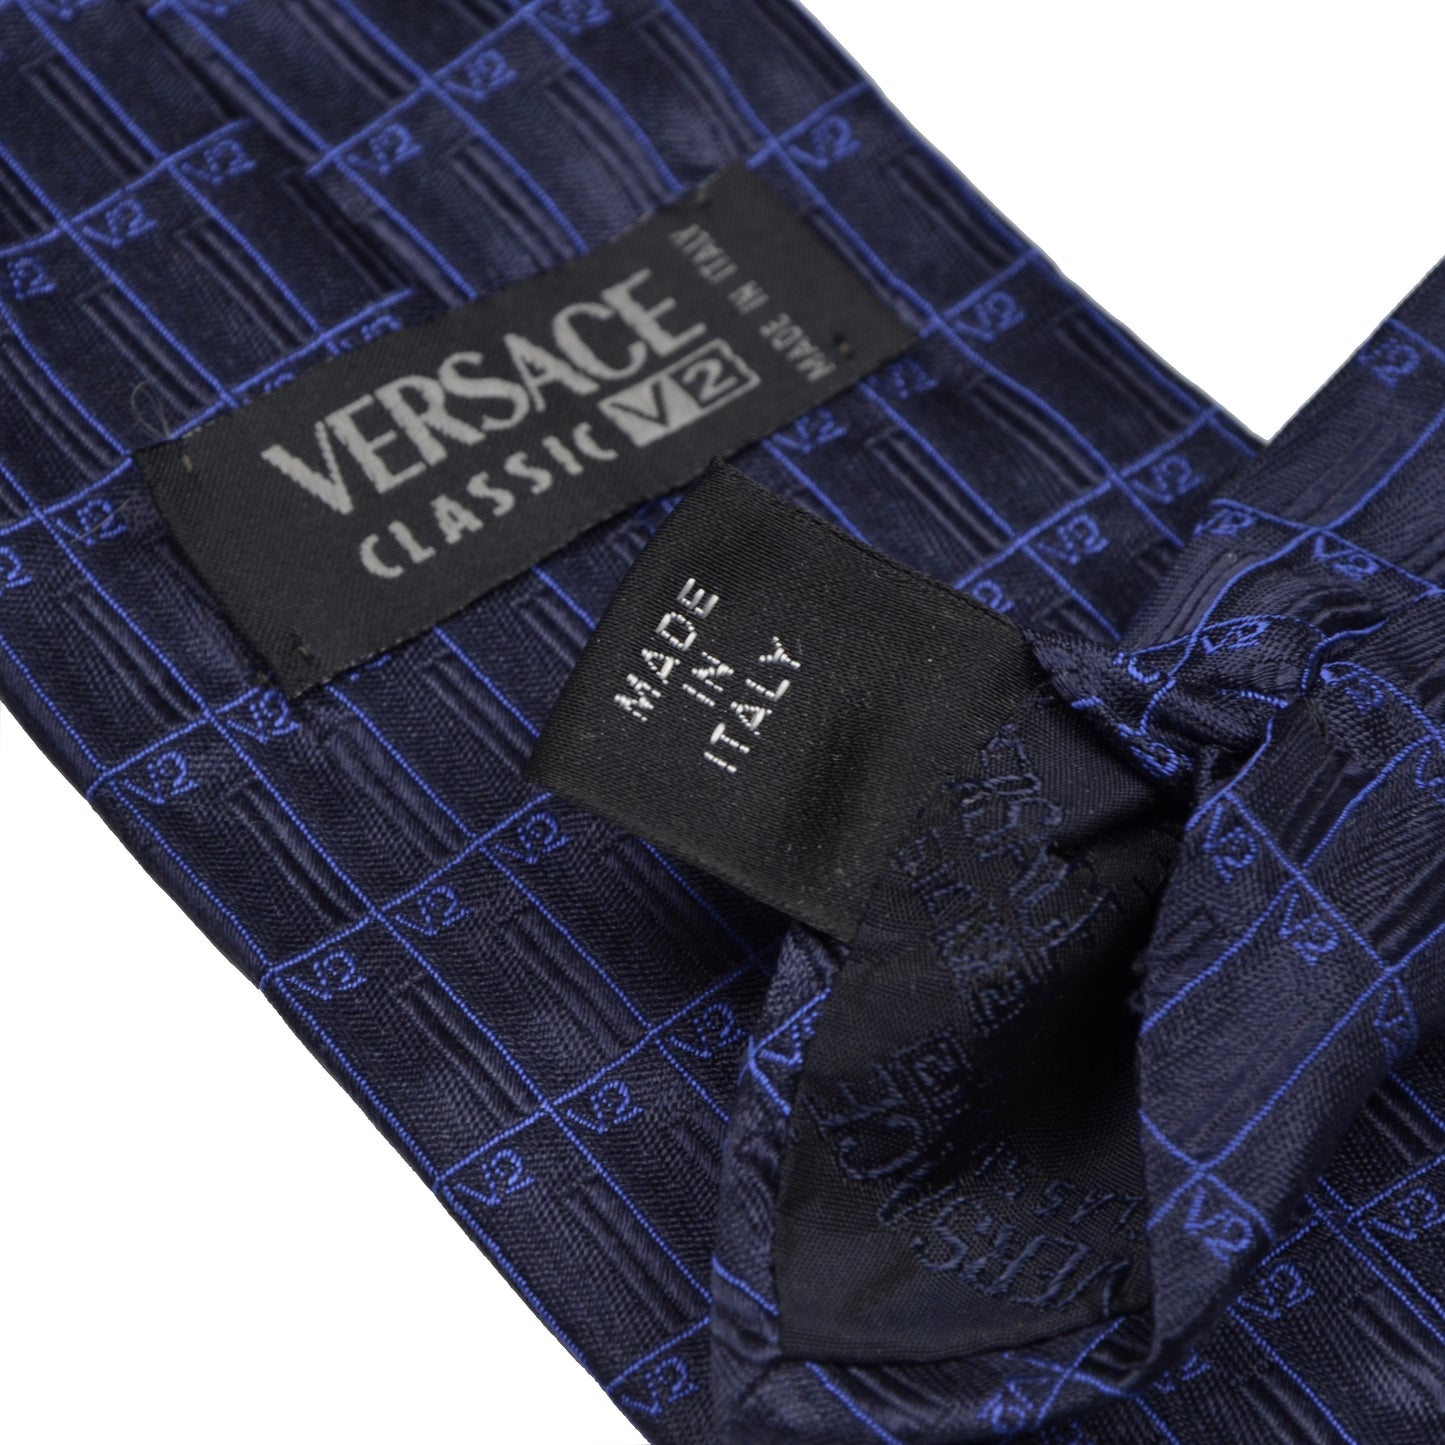 V2 Versace Spellout Seidenkrawatte - Schwarz &amp; Blau